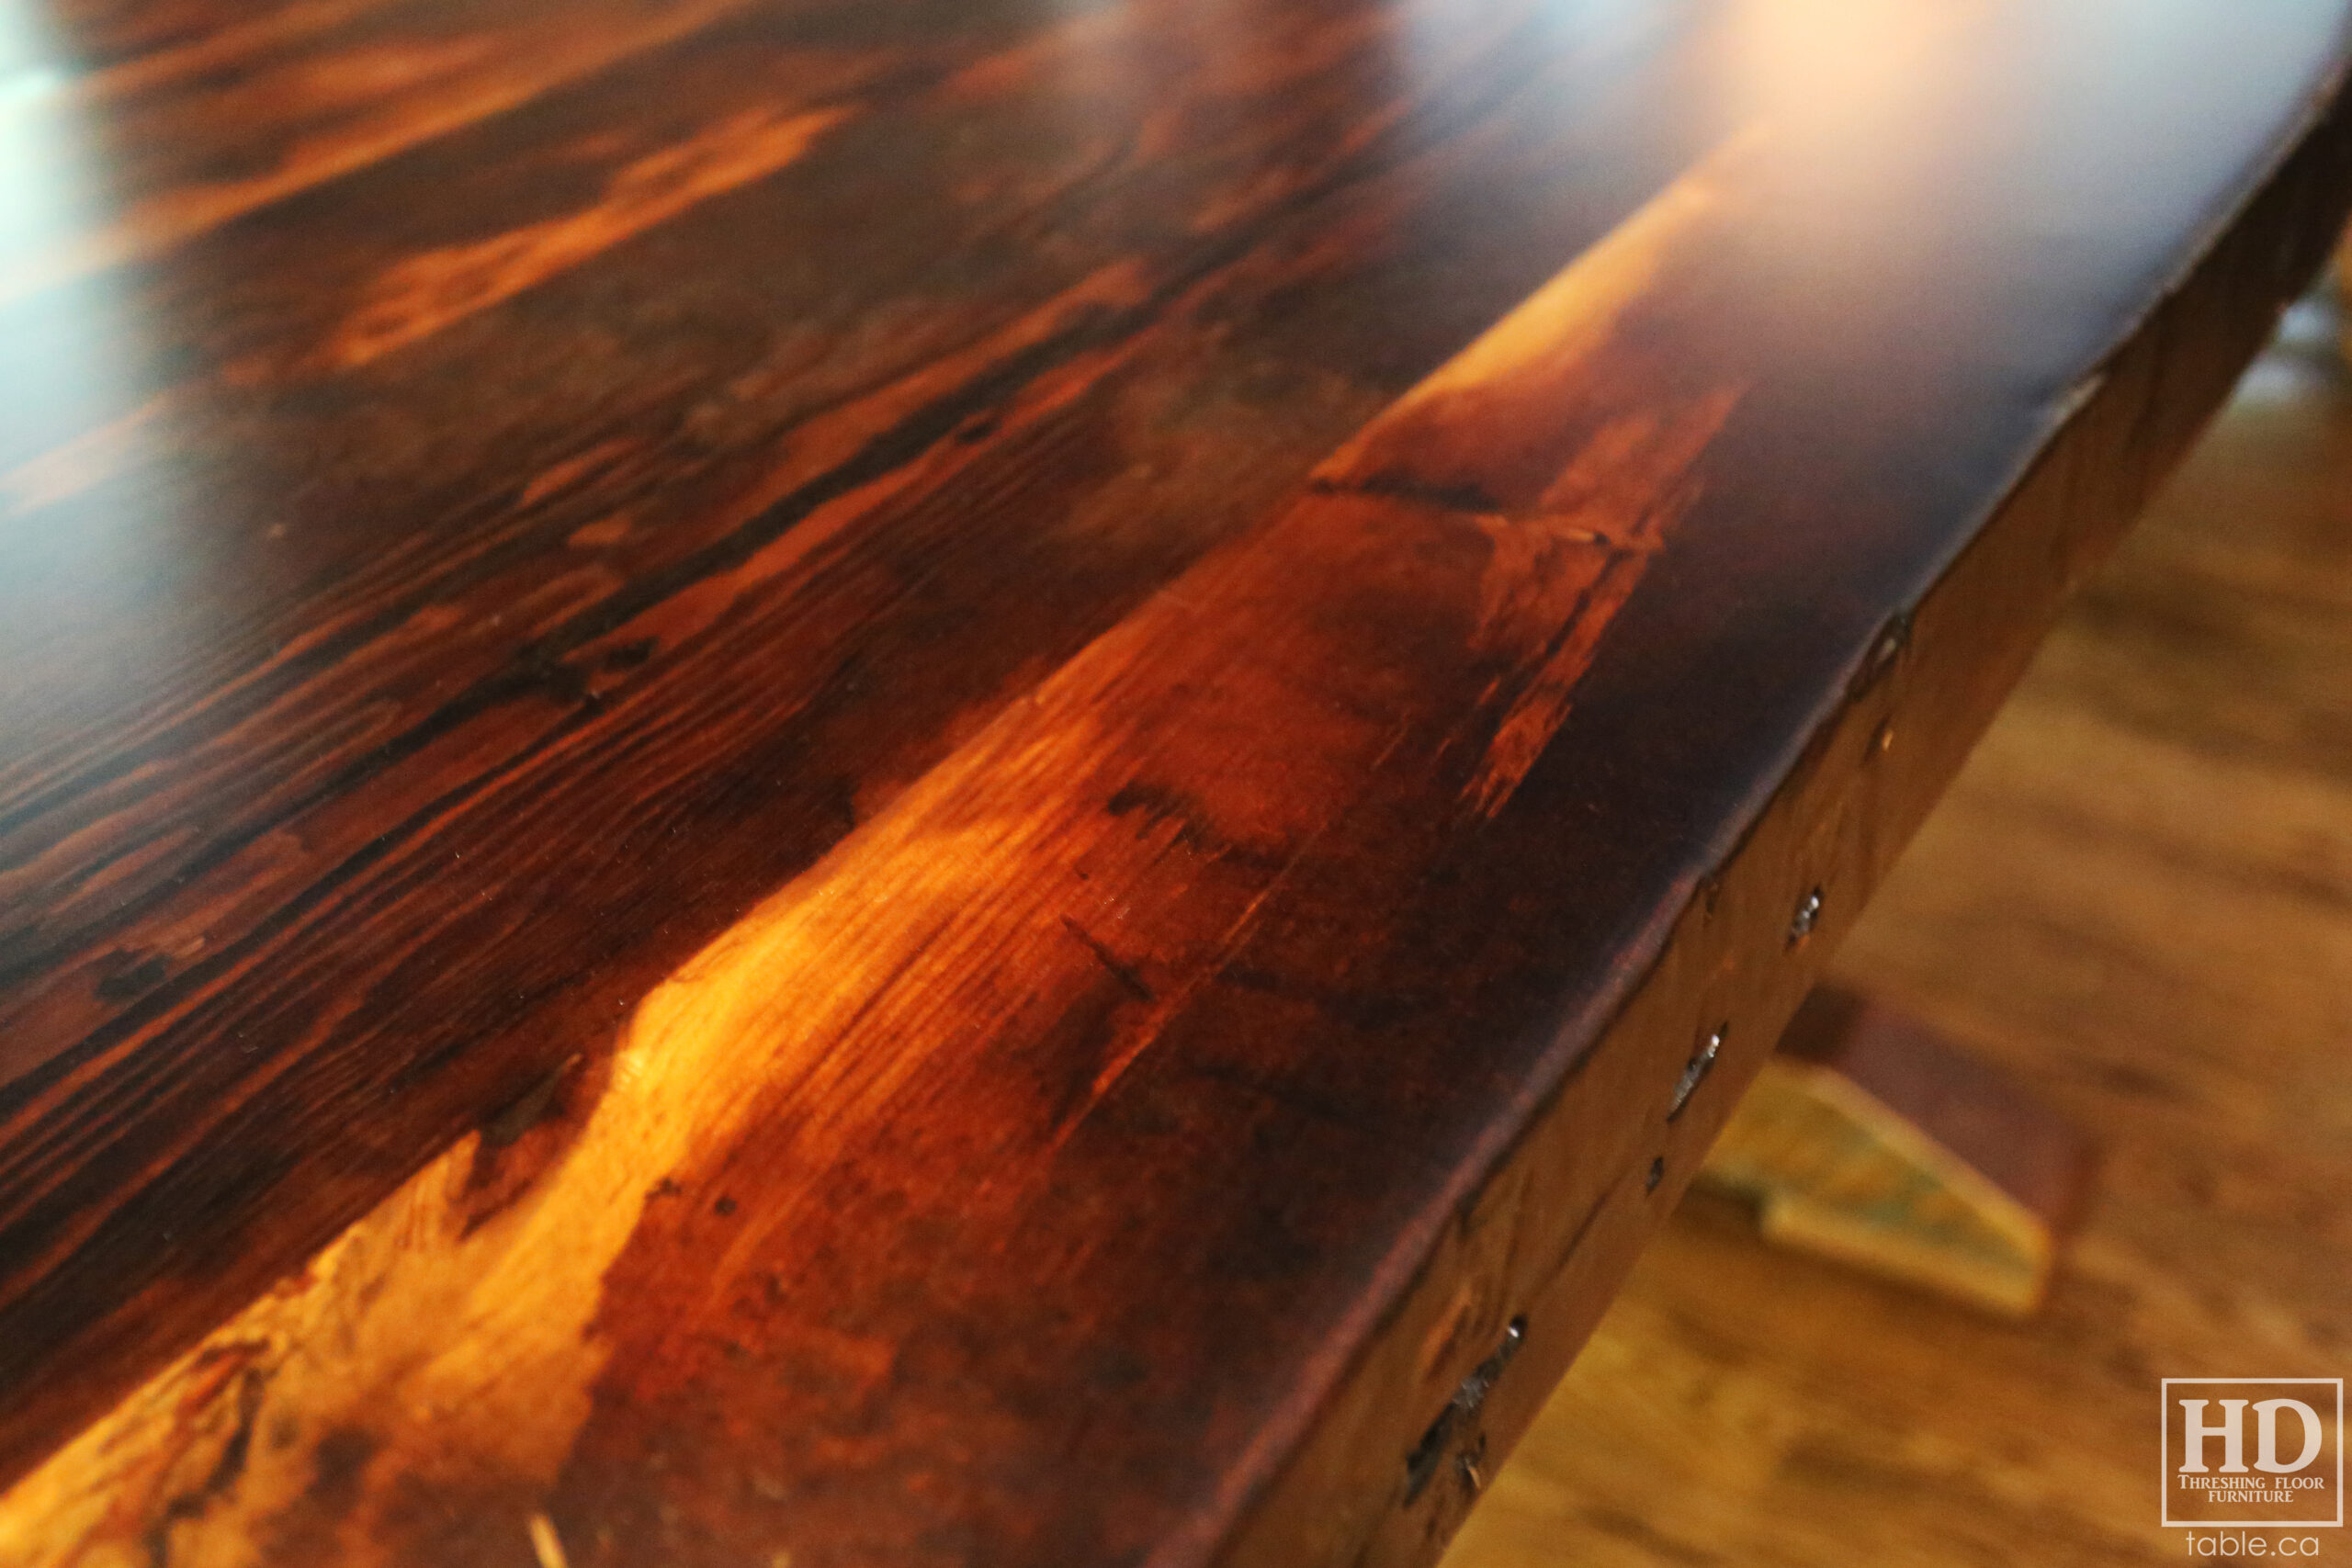 Heavy Duty Reclaimed Wood Table by HD Threshing Floor Furniture / Cambridge, Ontario / www.table.ca